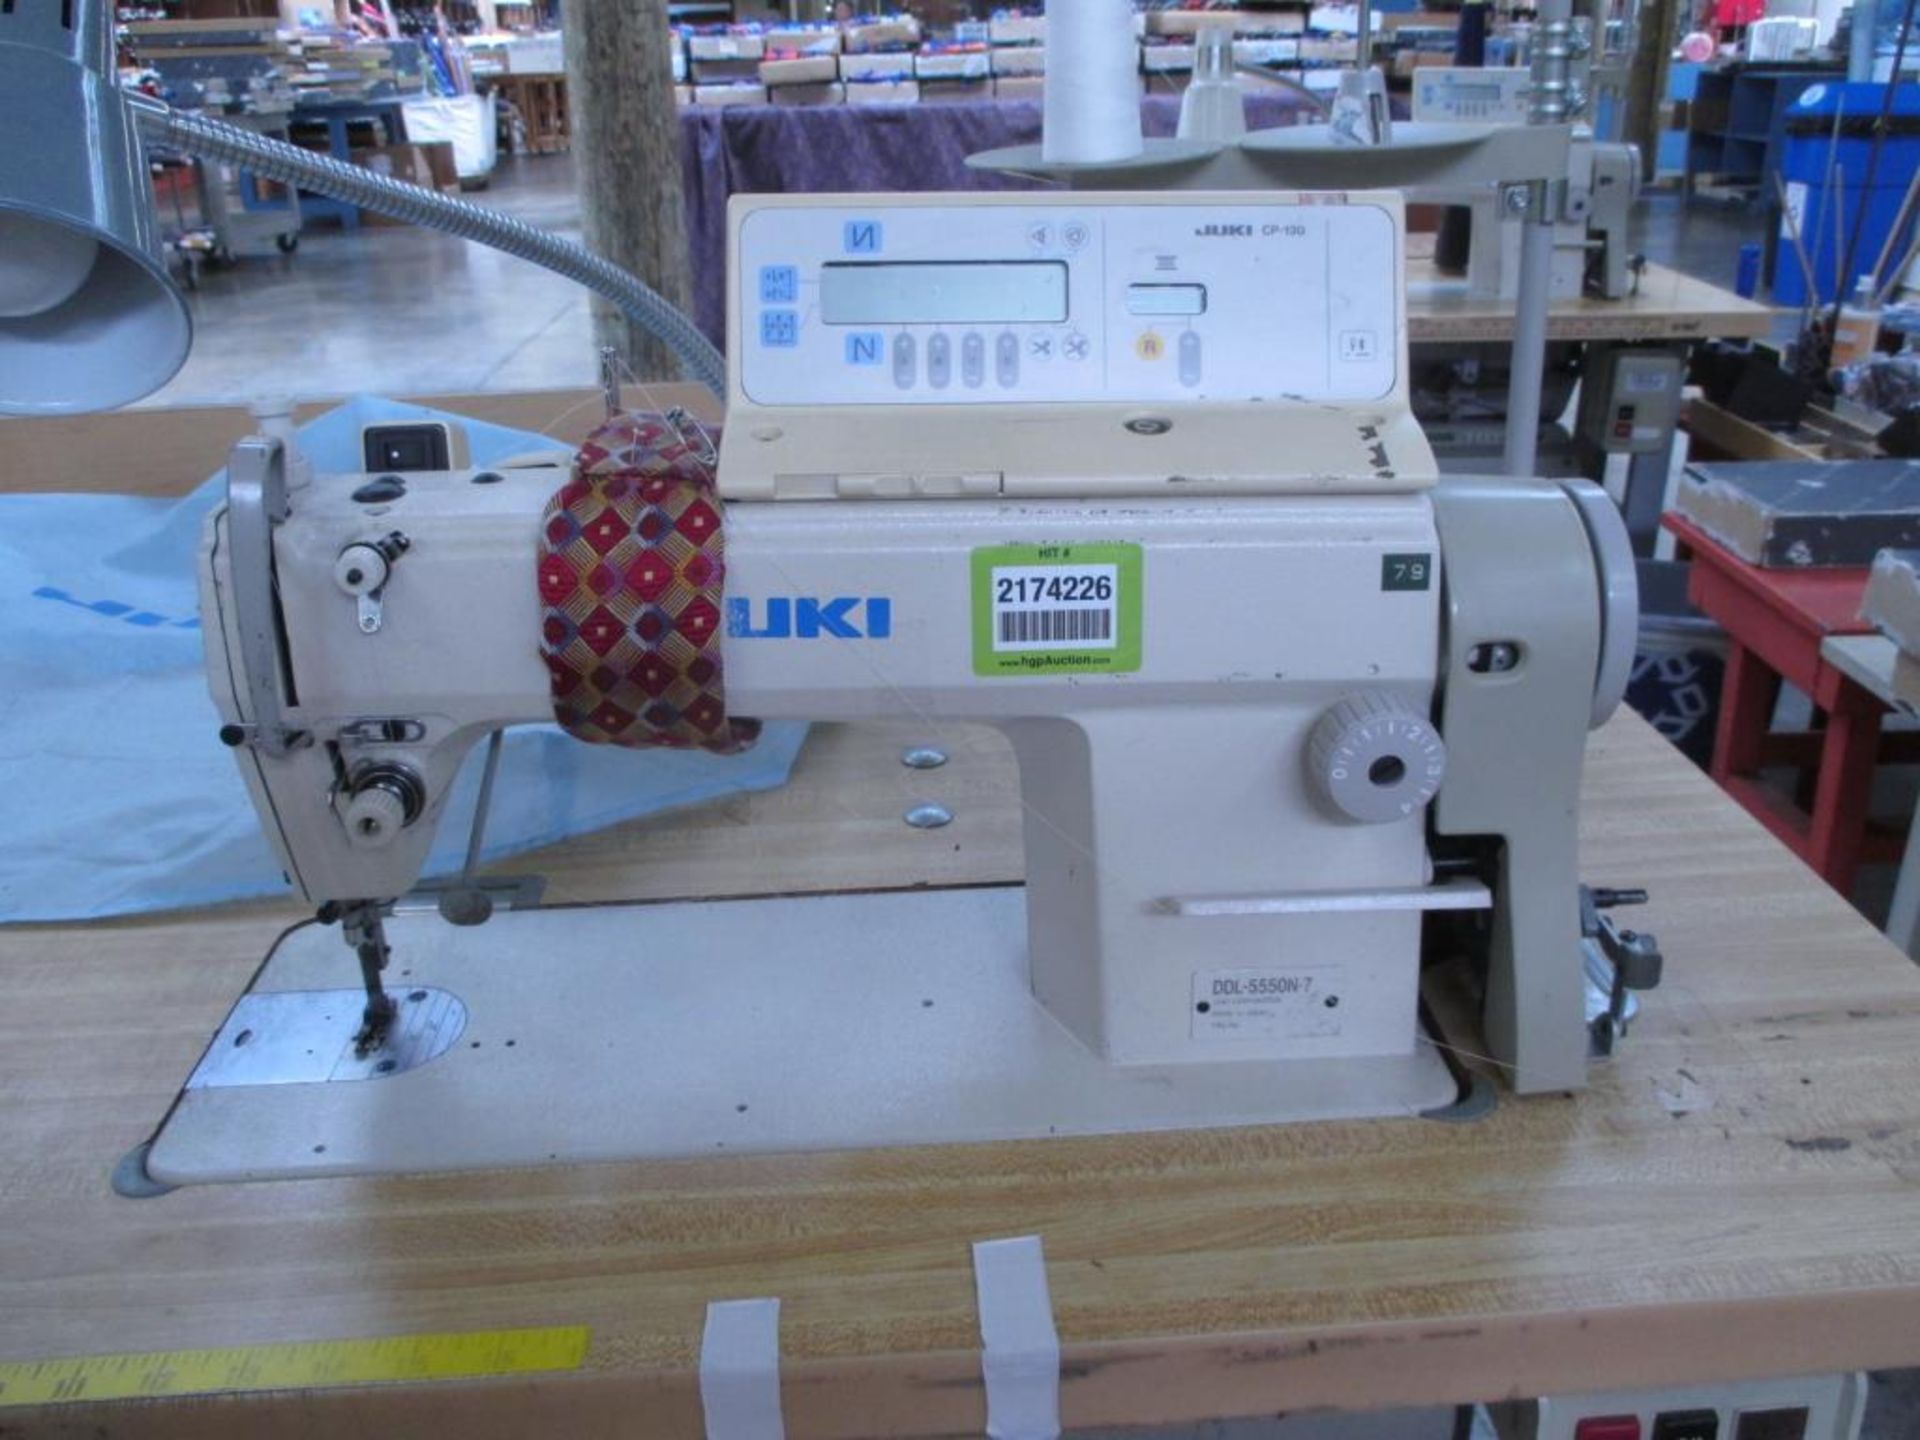 Lockstitch Reverse Industrial Sewing Machine. Juki DDL-5550N-7 1-Needle Lockstitch Reverse - Image 2 of 9